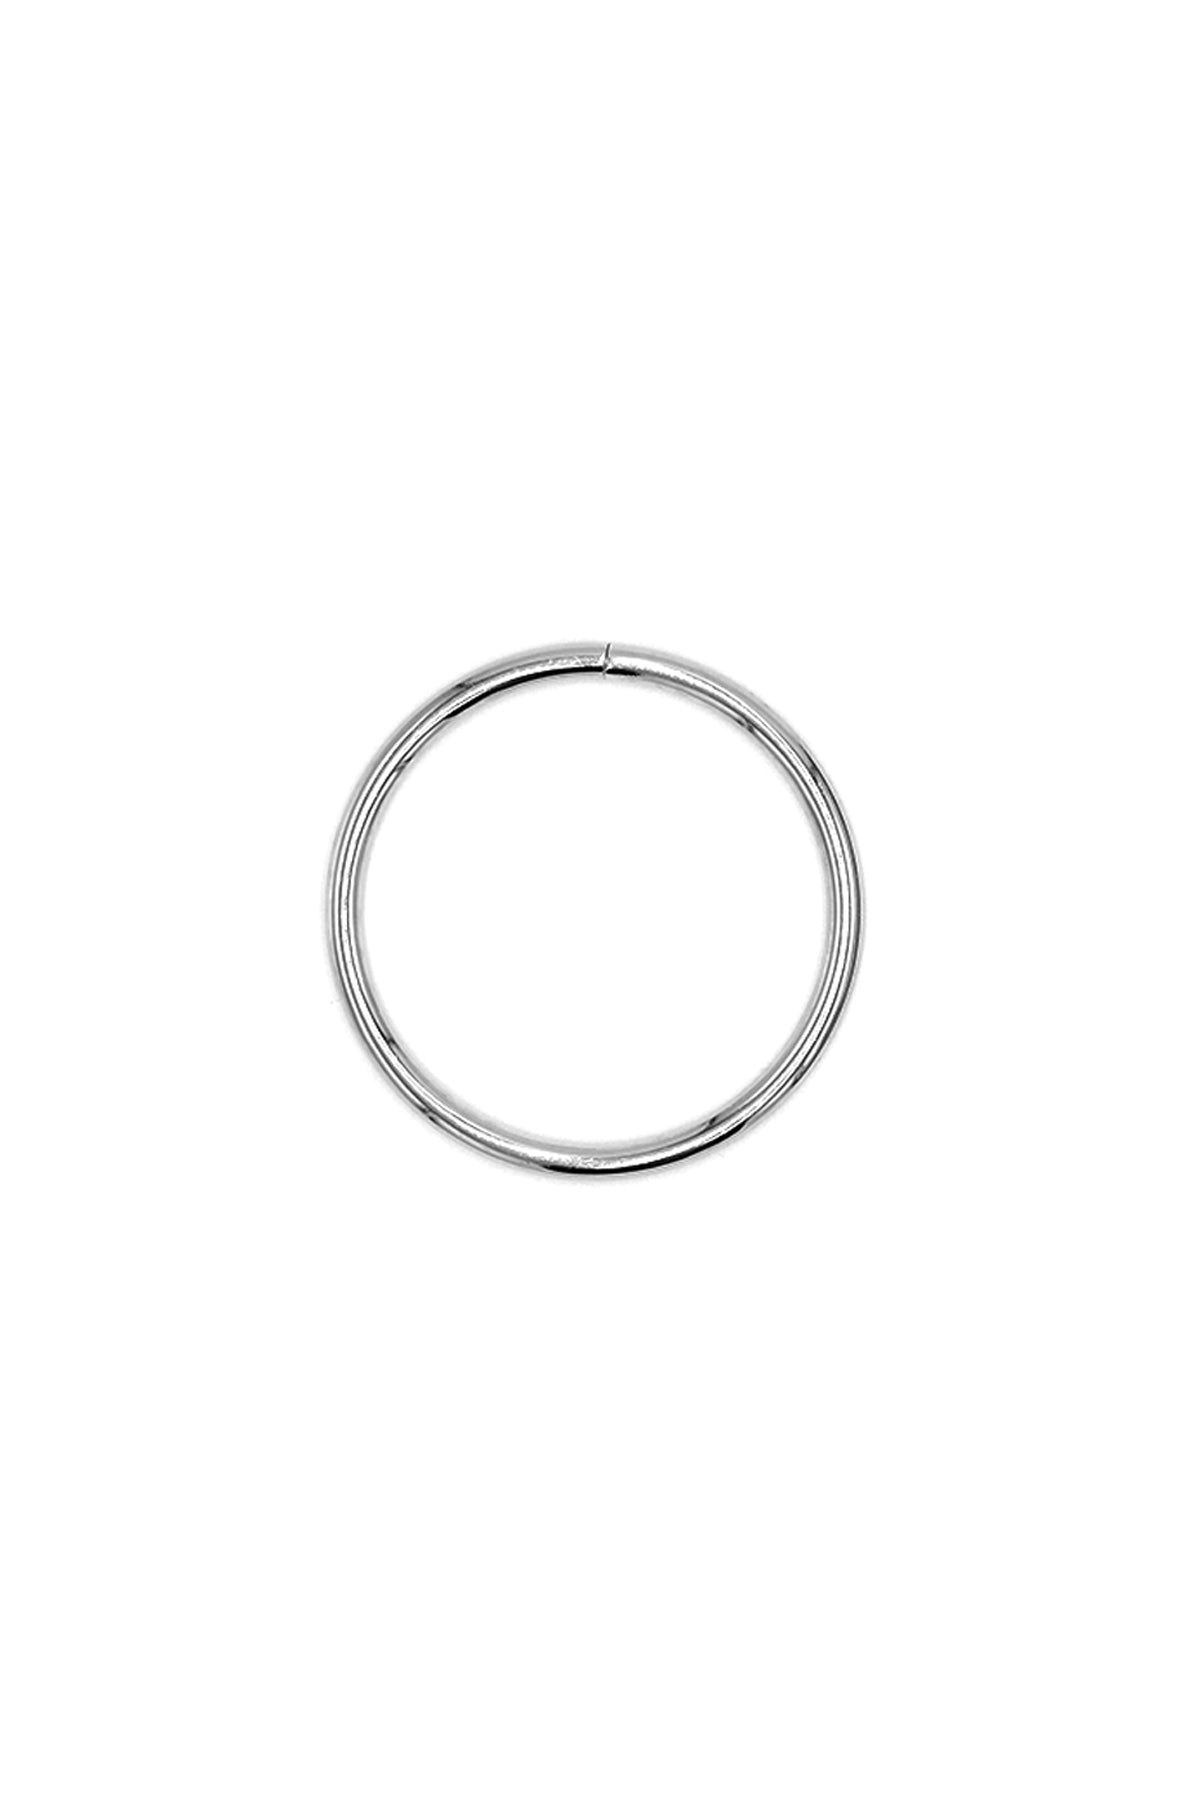 Chrome Cock Ring (2.5inch/7cm Diameter)